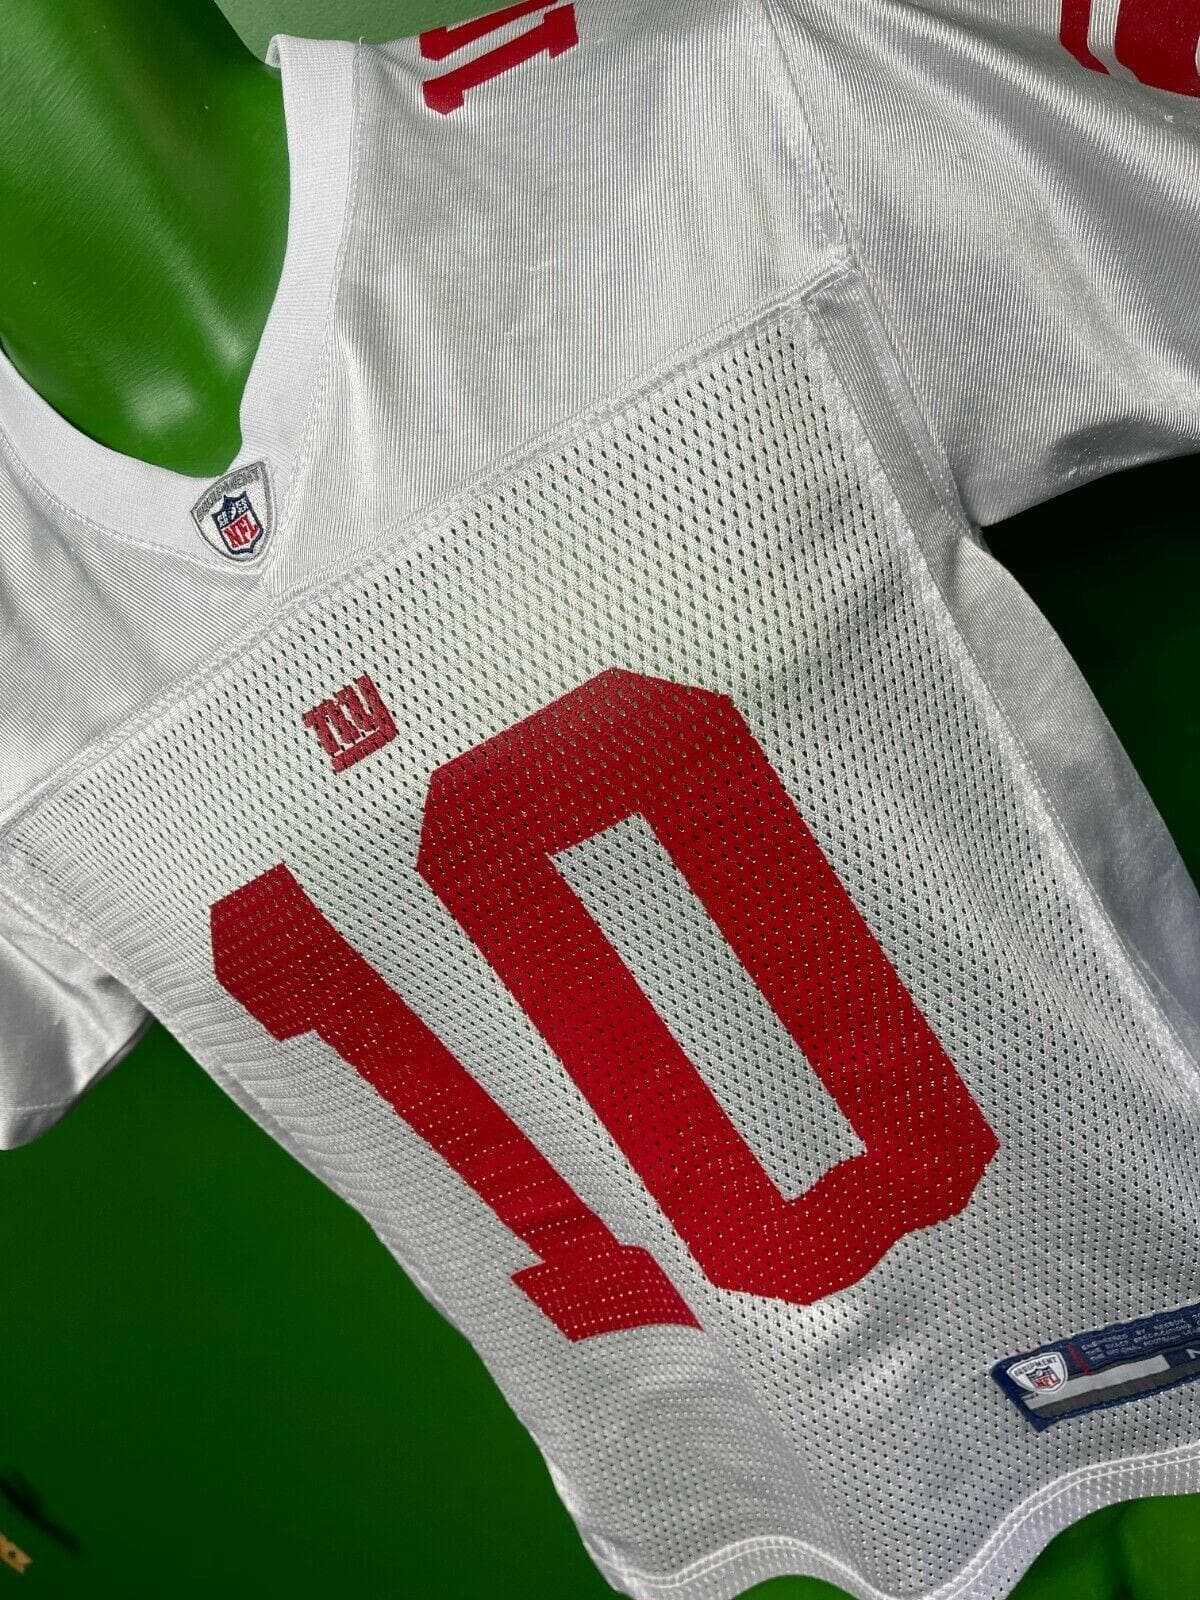 NFL New York Giants Eli Manning #10 Reebok Jersey Youth Medium 10-12